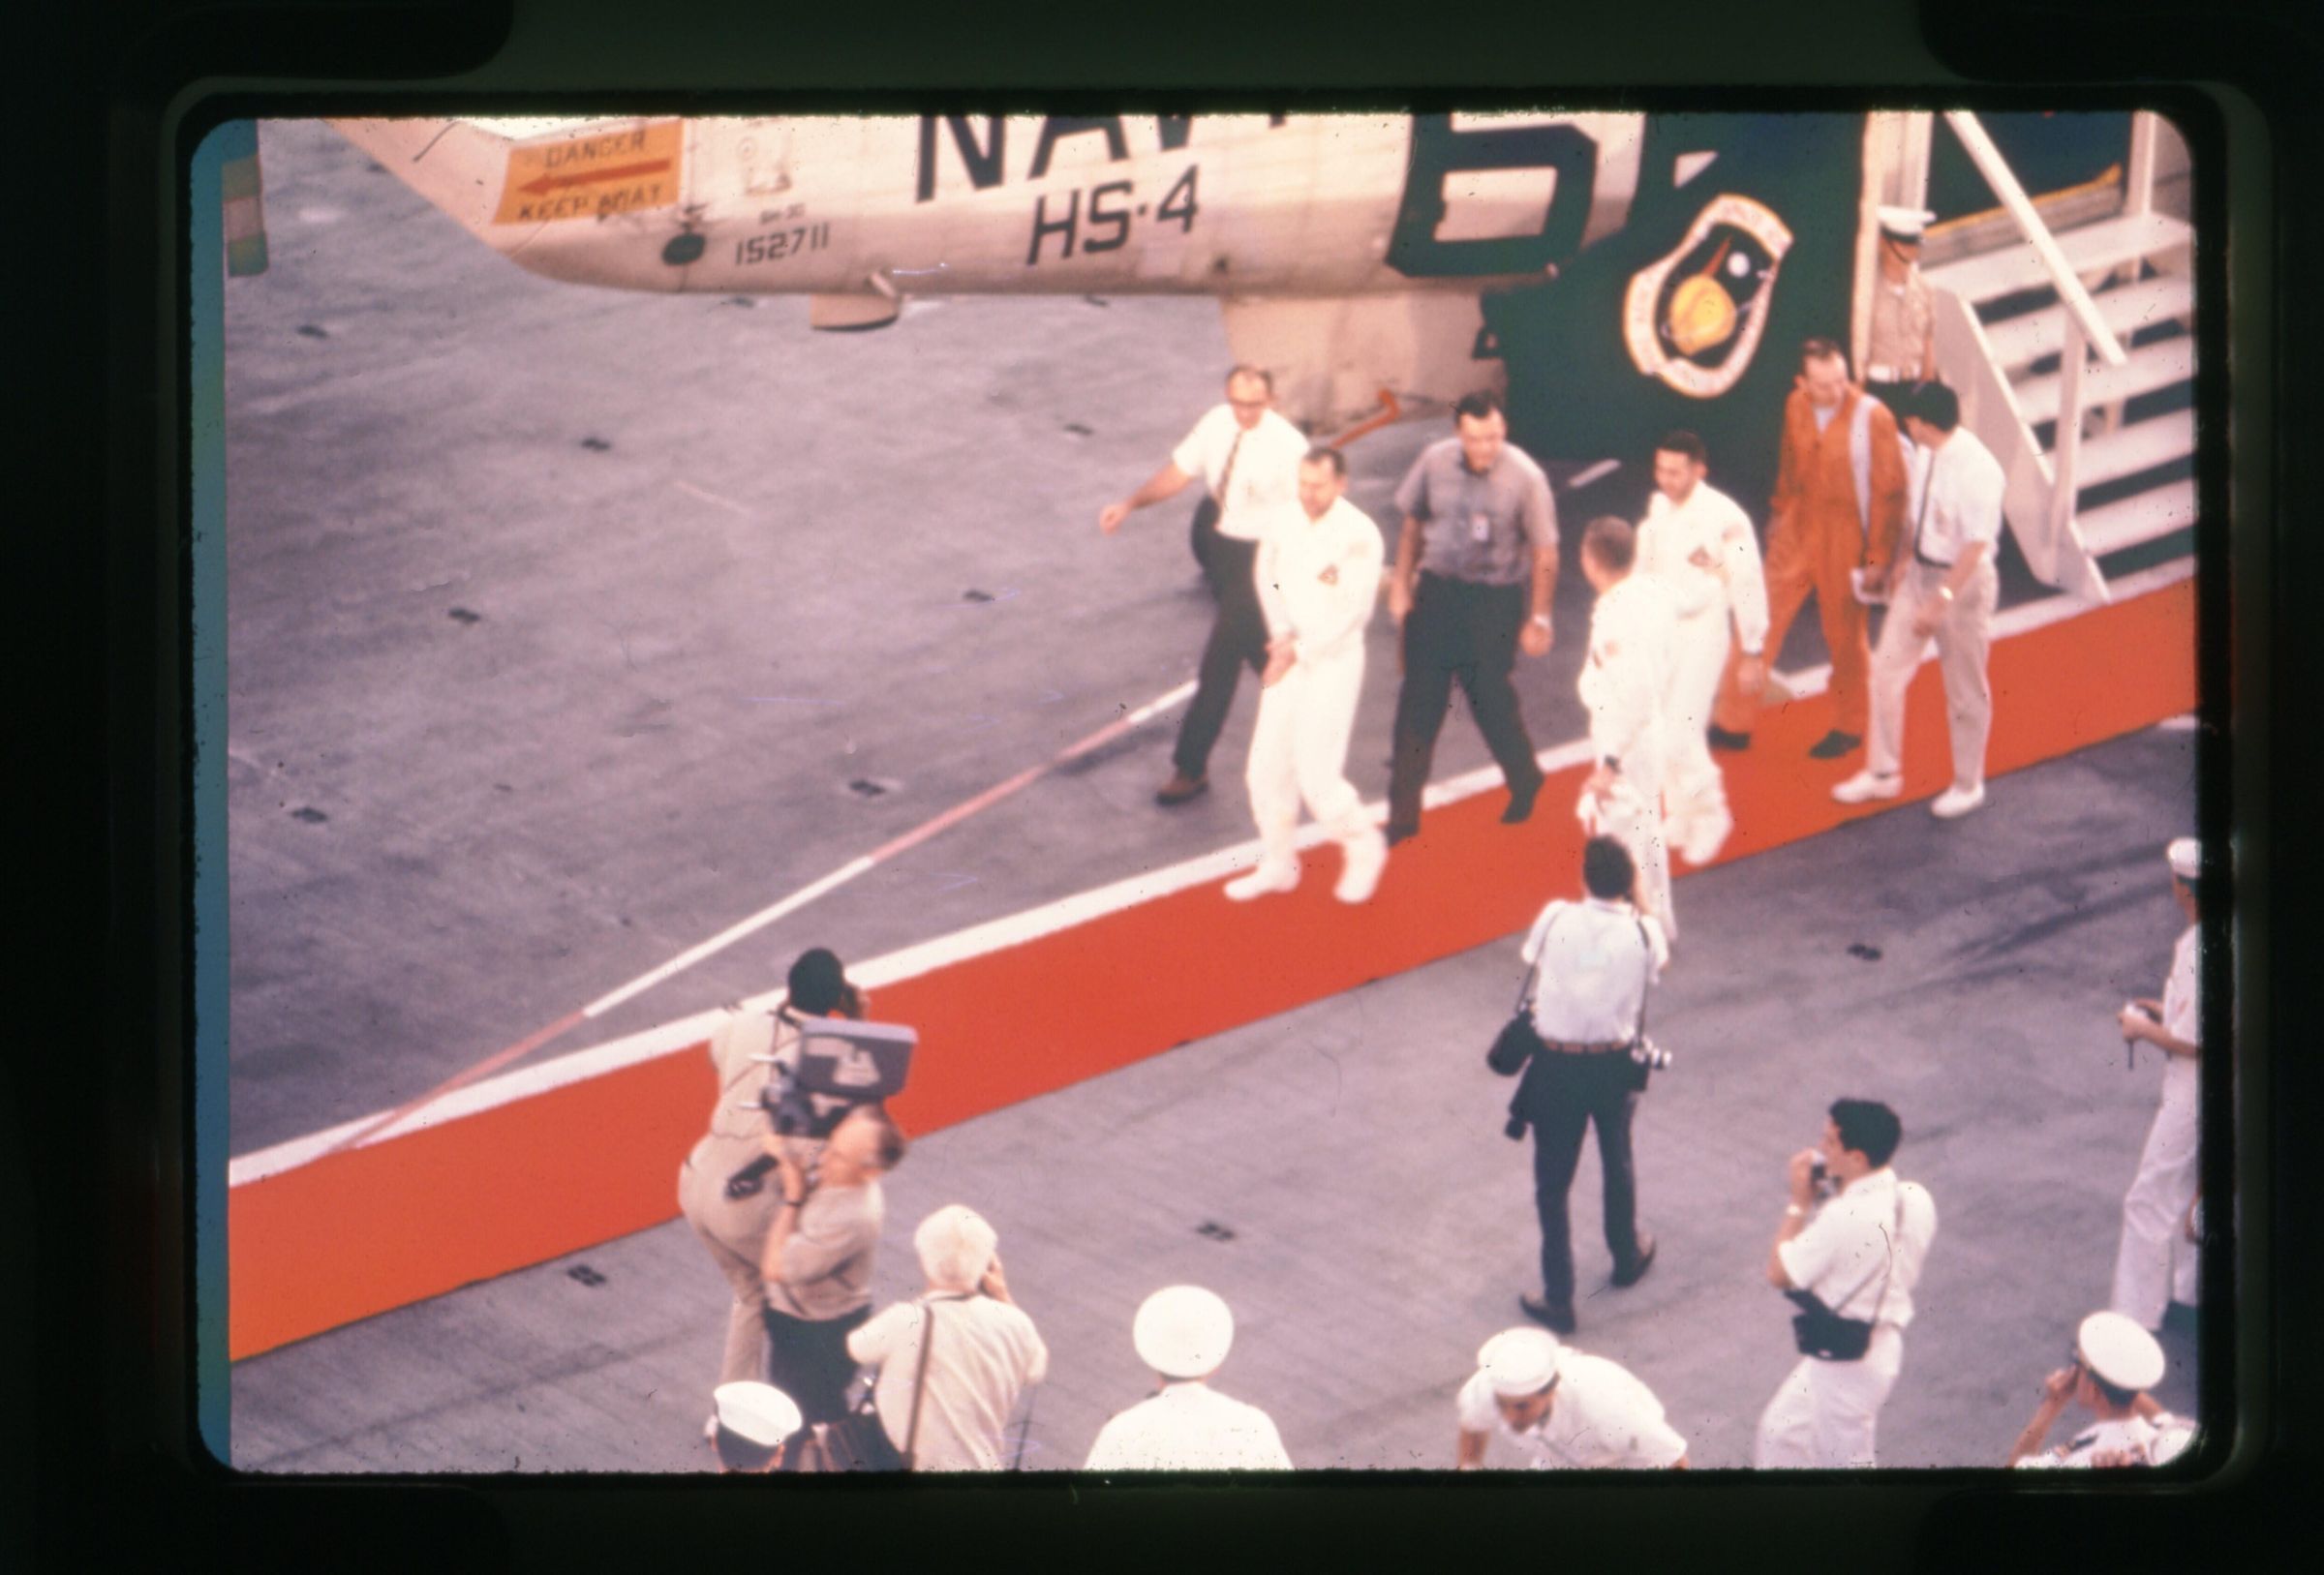 Primary Image of Apollo 8 Crewmembers Walk the Red Carpet